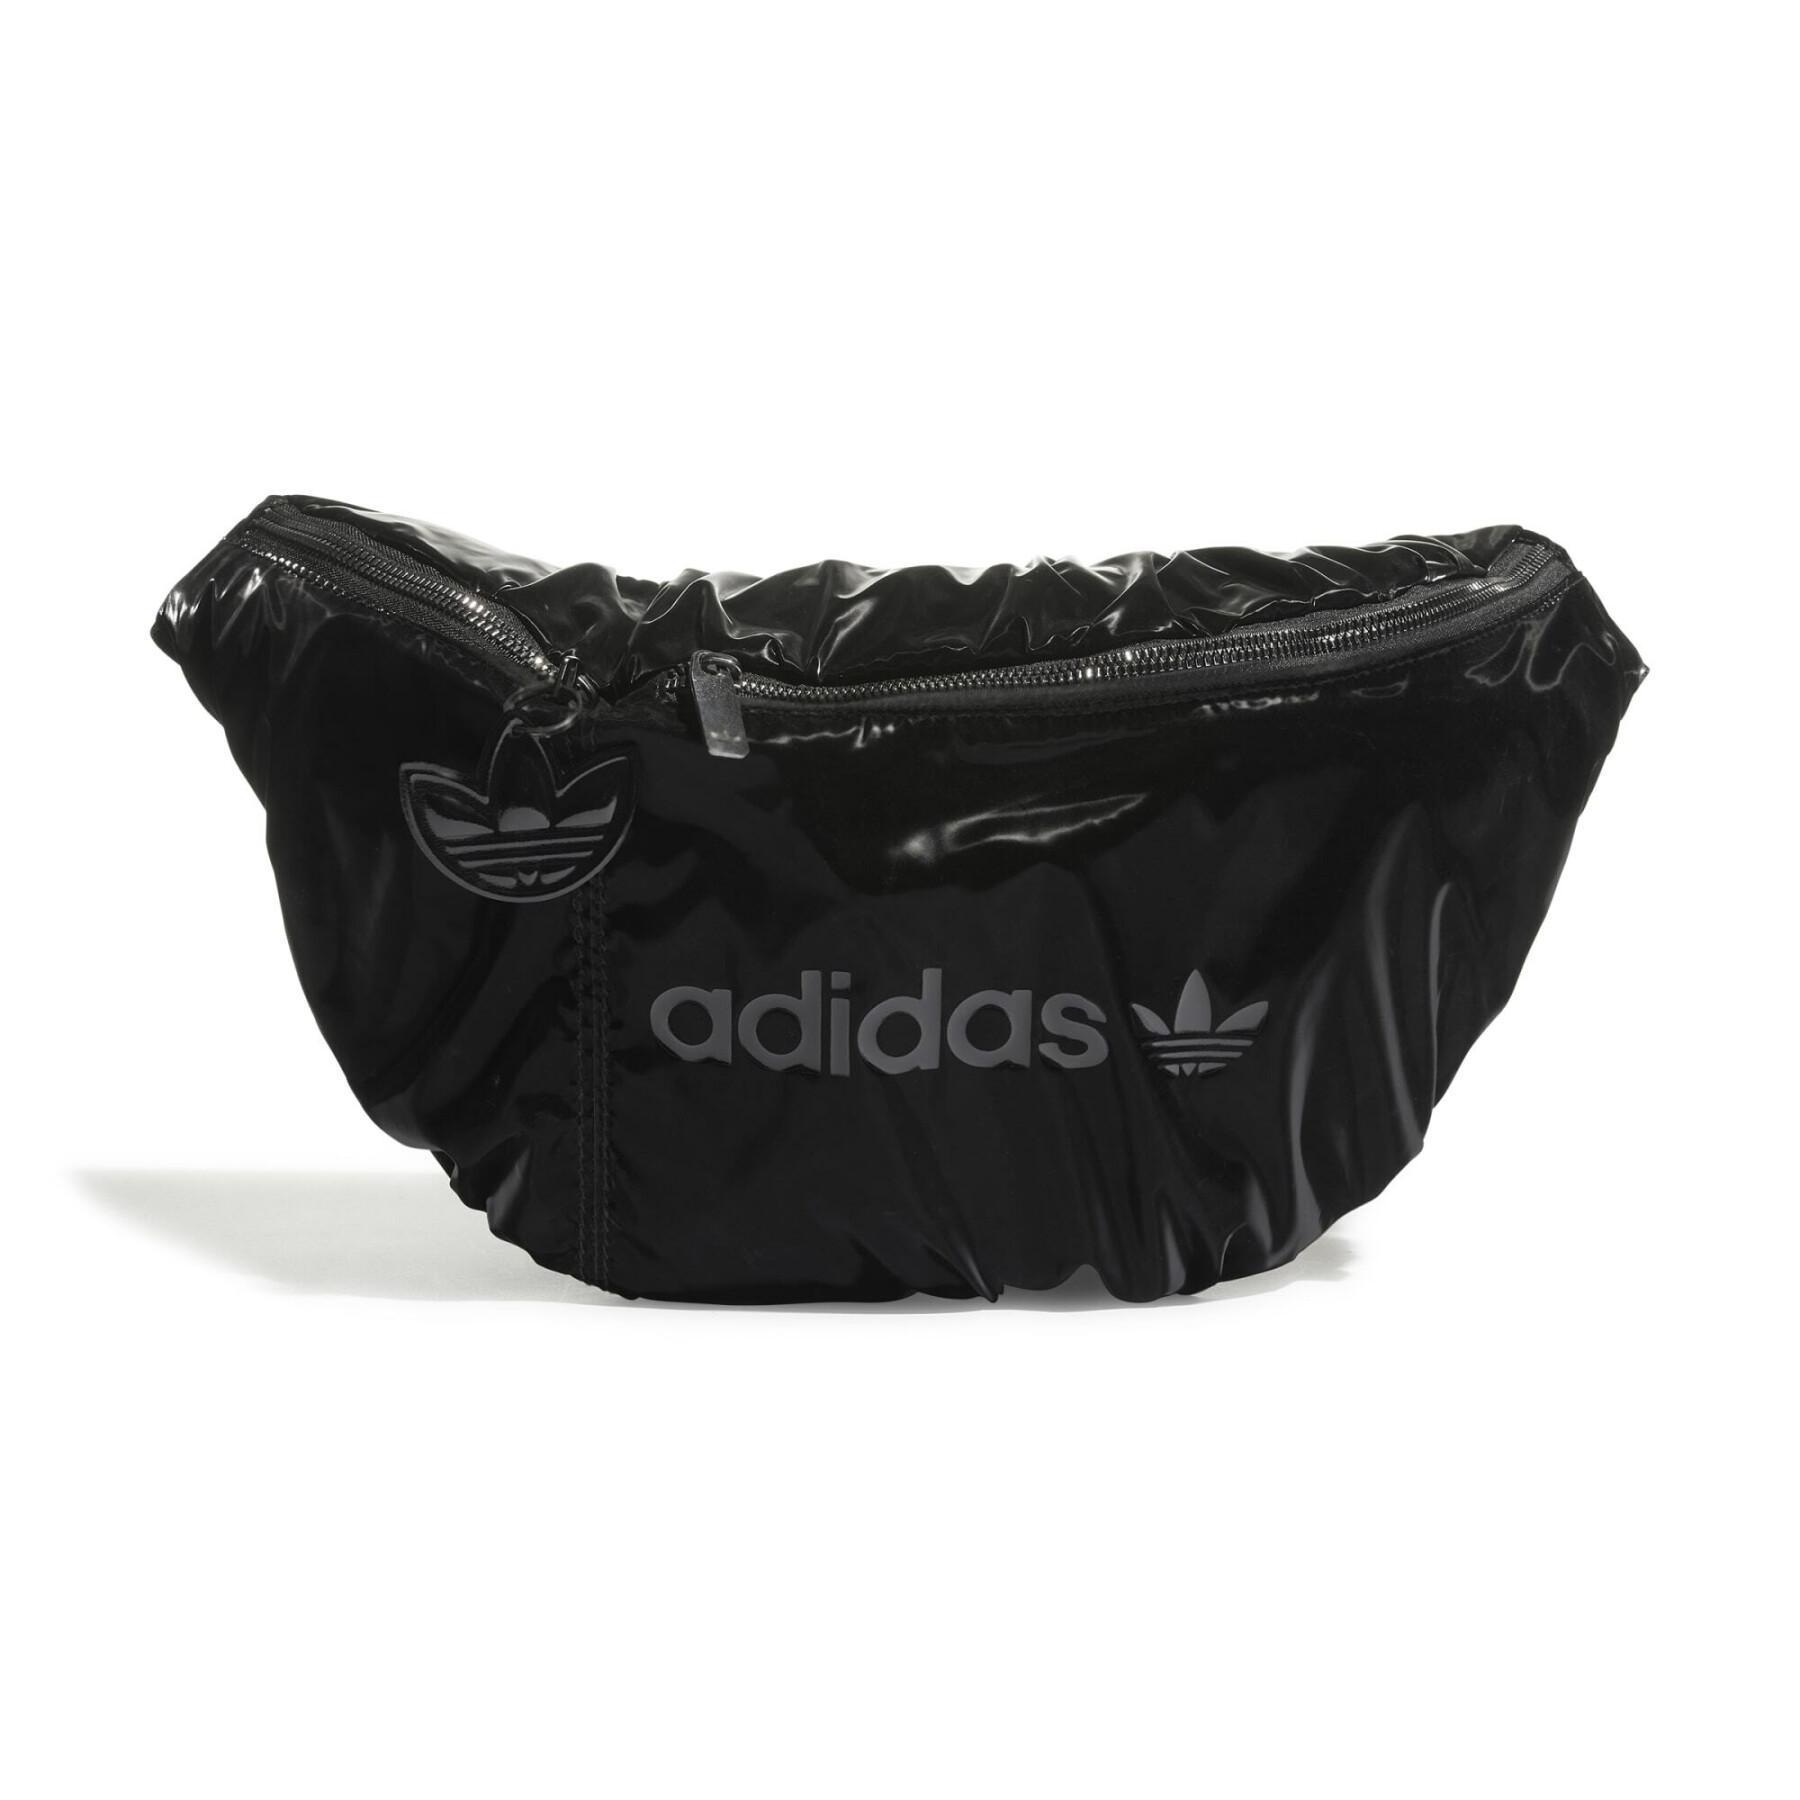 Damski plecak typu fanny pack adidas Originals